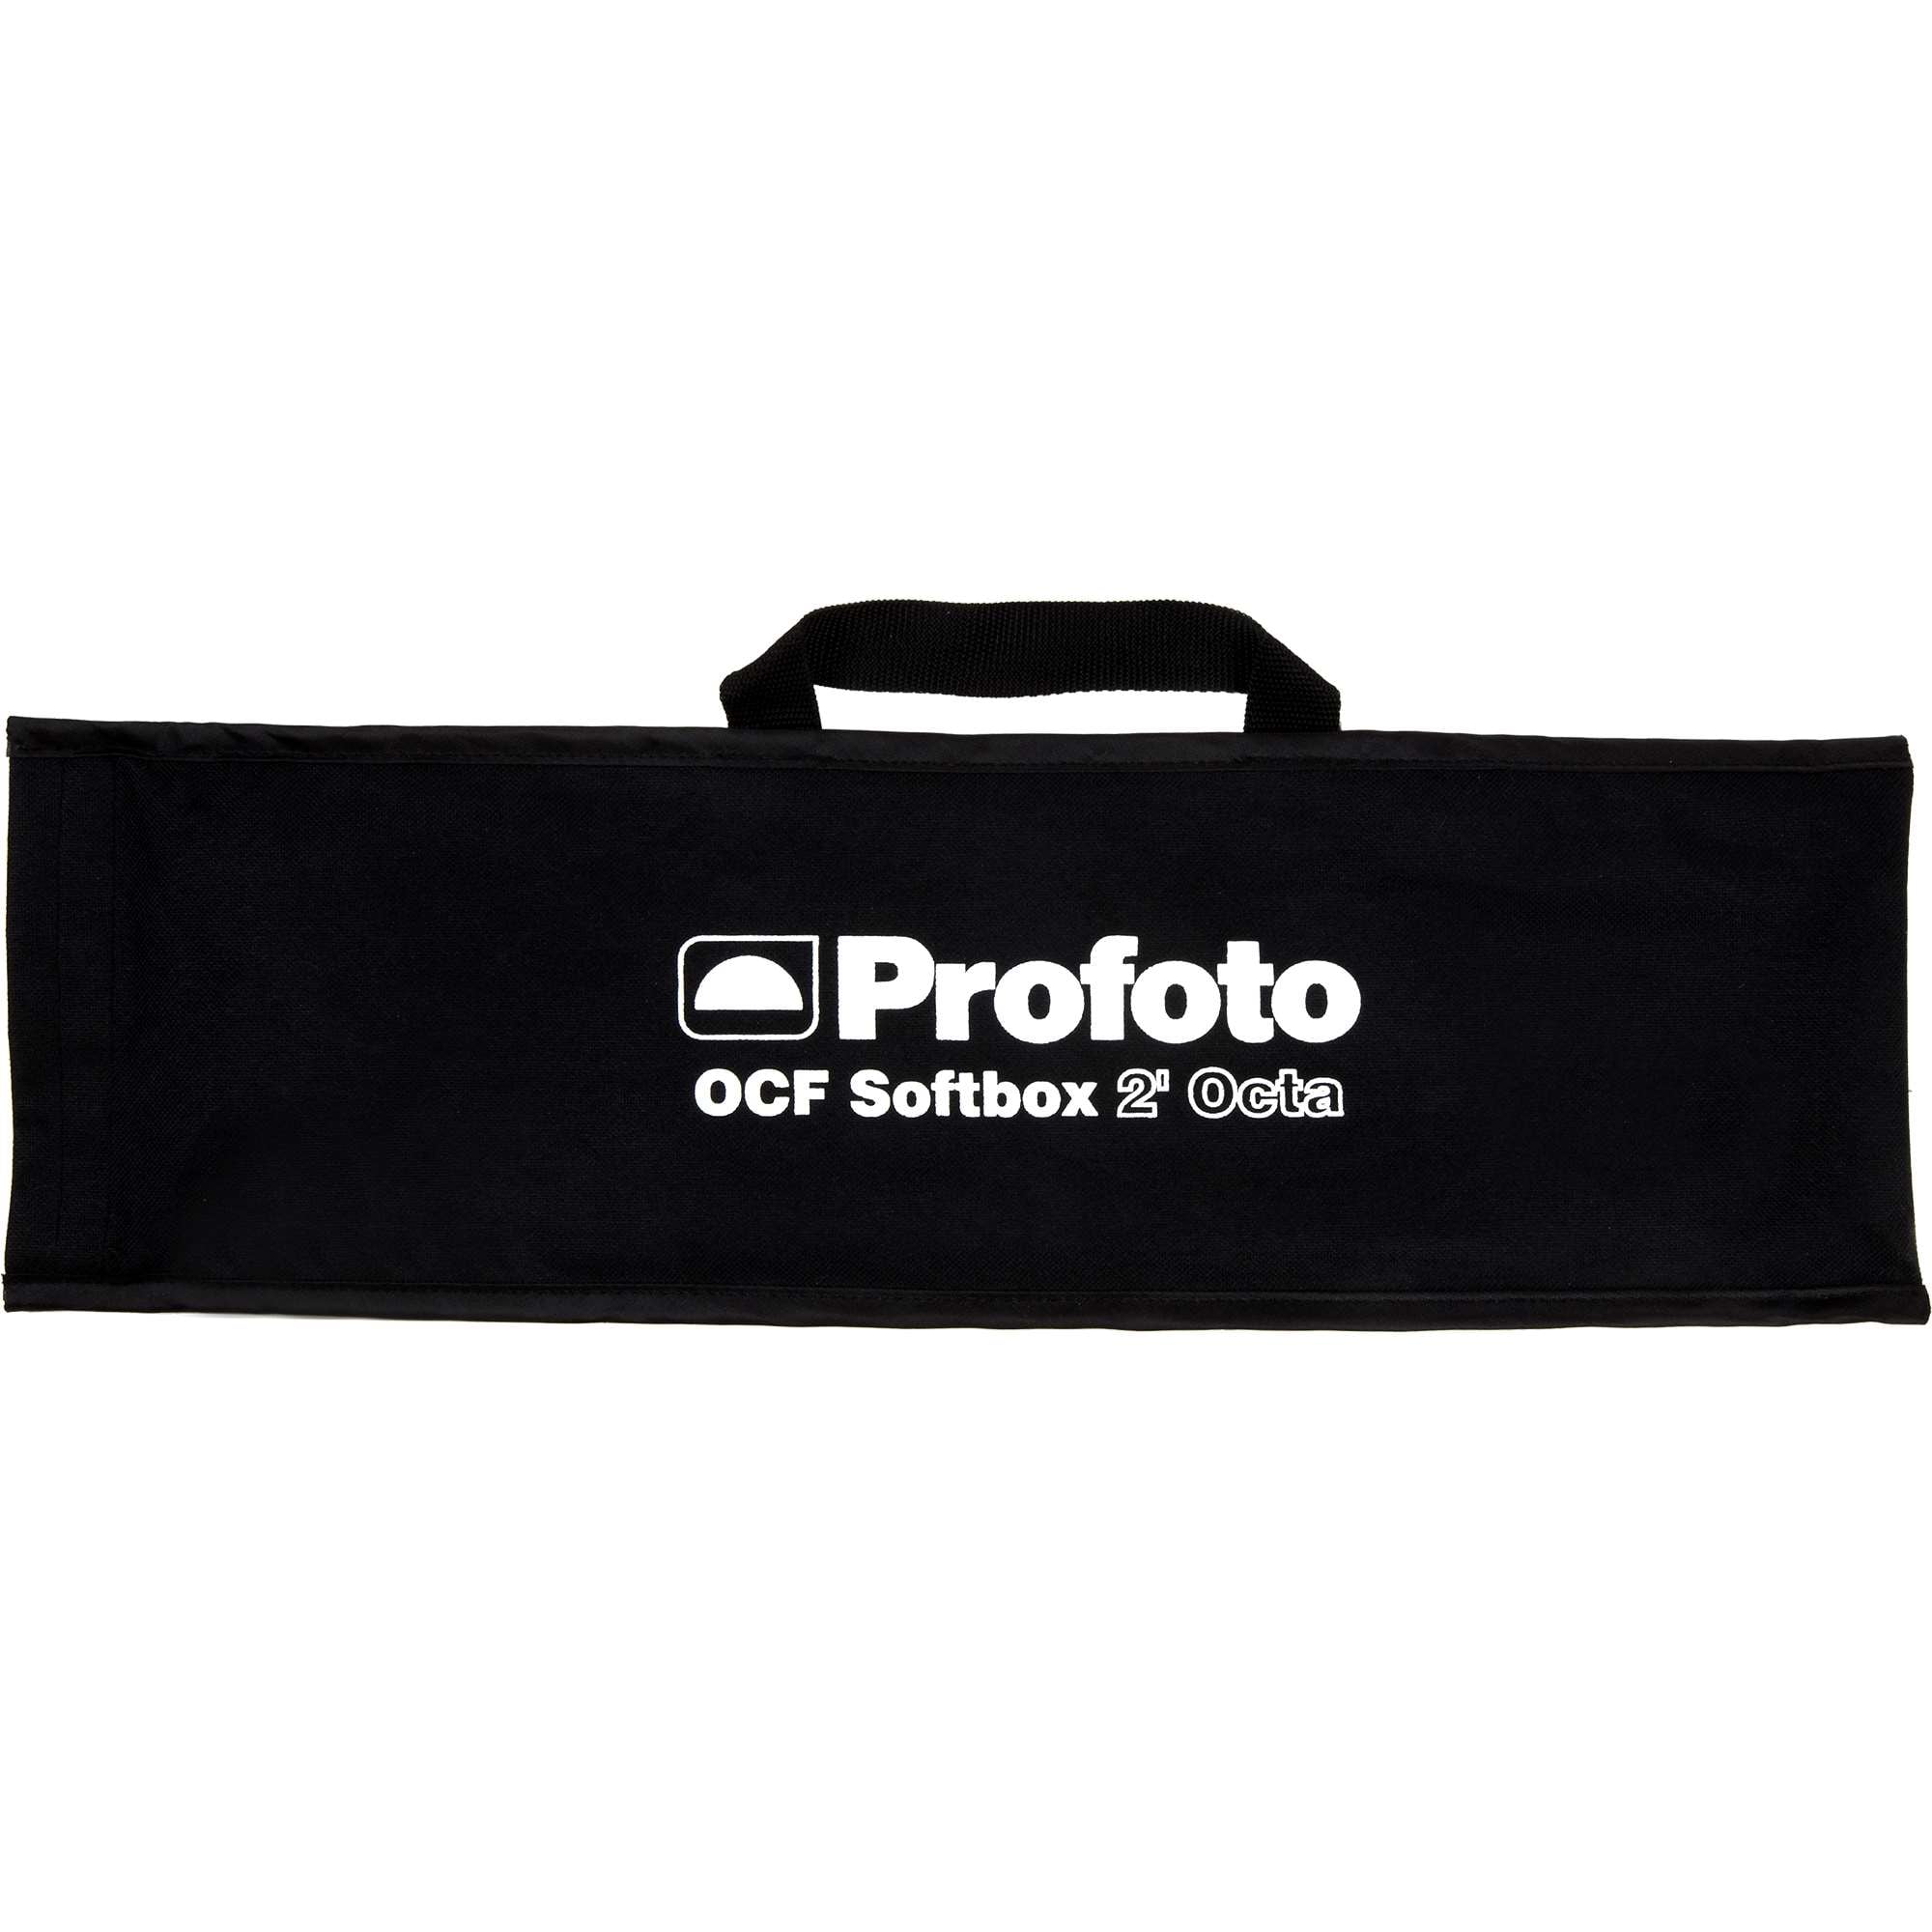 Profoto OCF Softbox Octa 2"